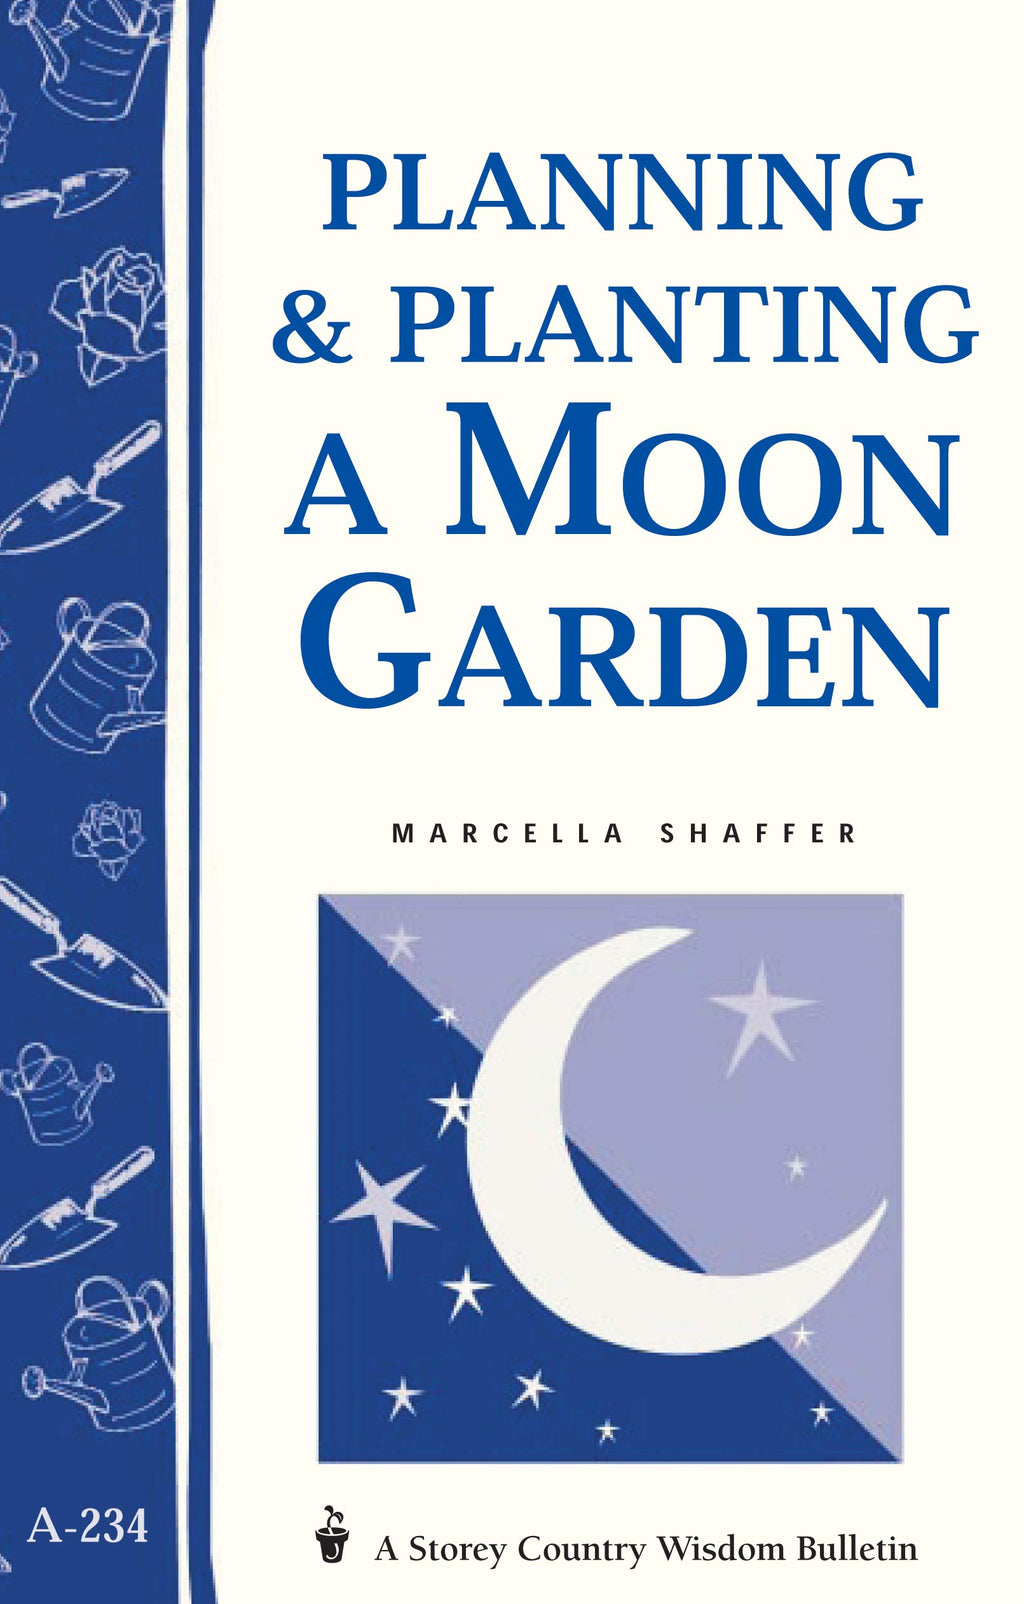 Planning & planting a moon garden: 158017339X